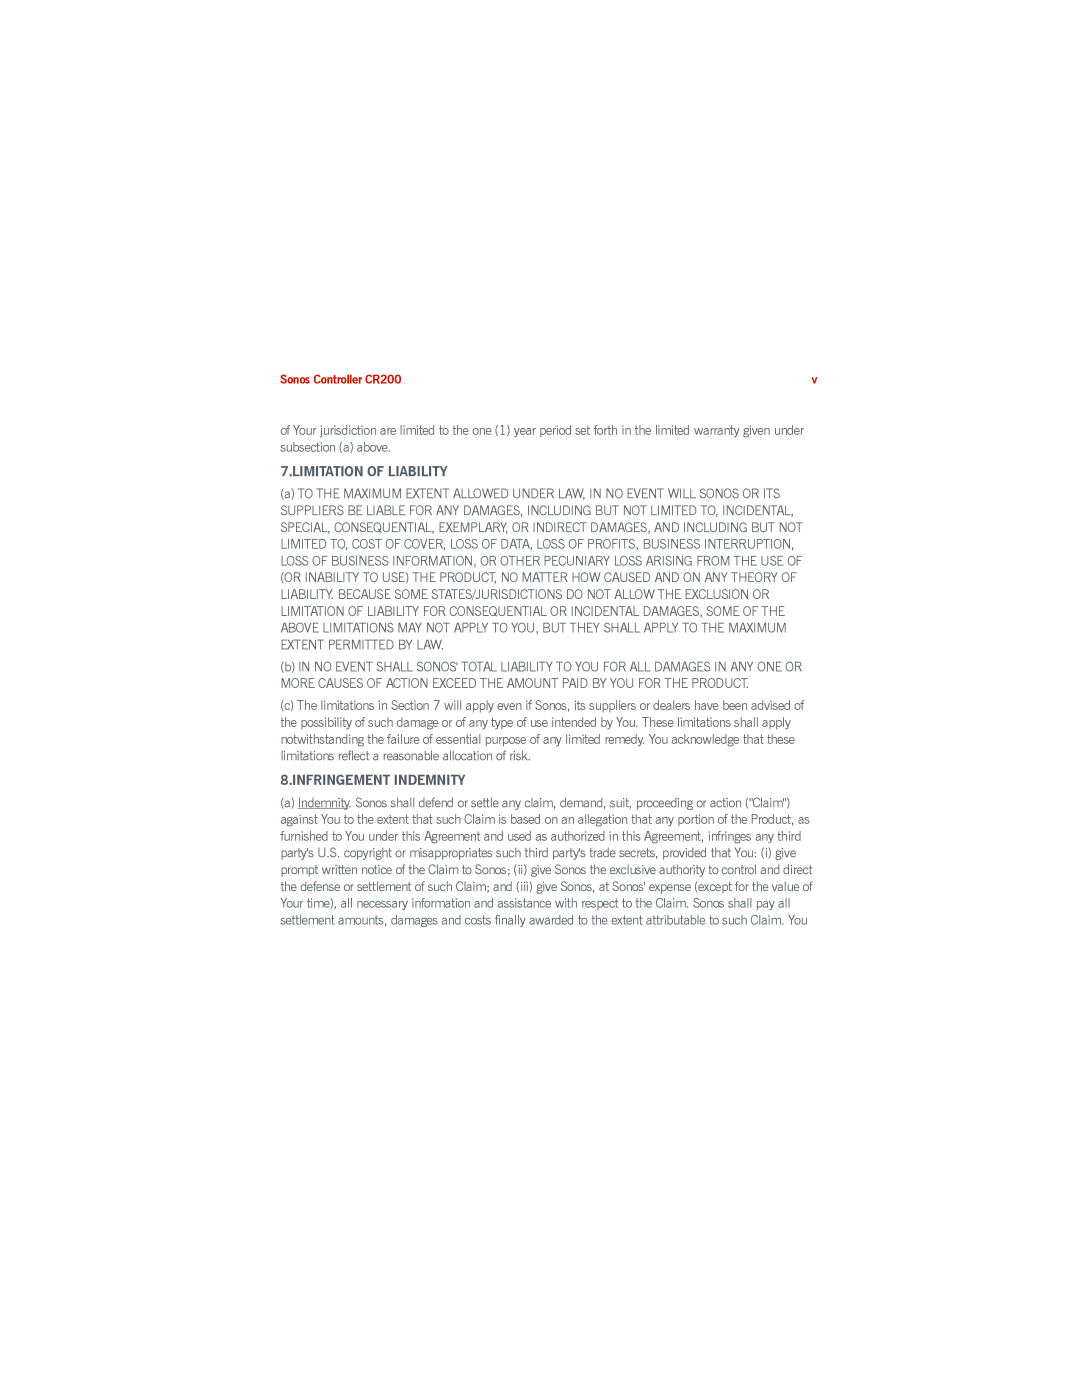 Sonos manual Limitation Of Liability, Infringement Indemnity, English Deutsch Nederlands Svenska, Sonos Controller CR200 